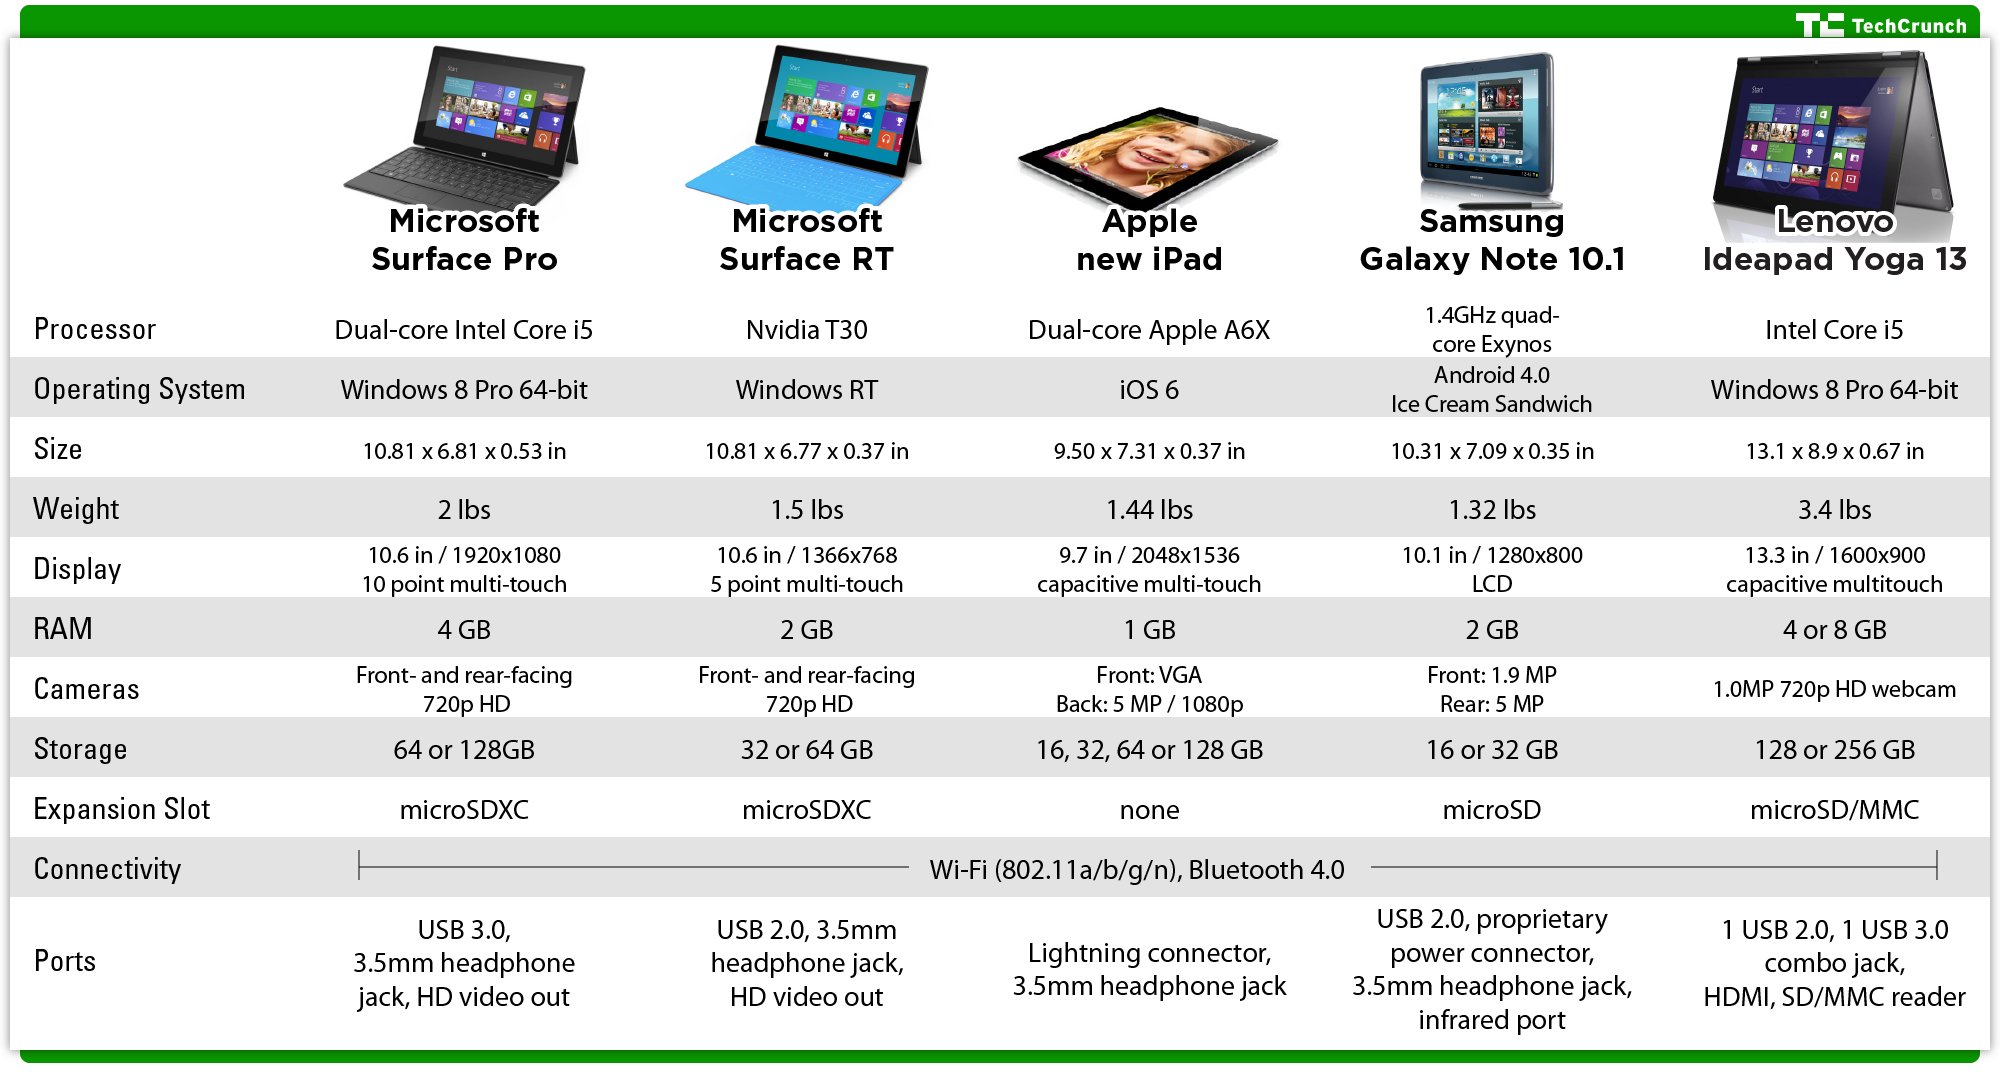 Microsoft Surface Pro Vs Ipad 3